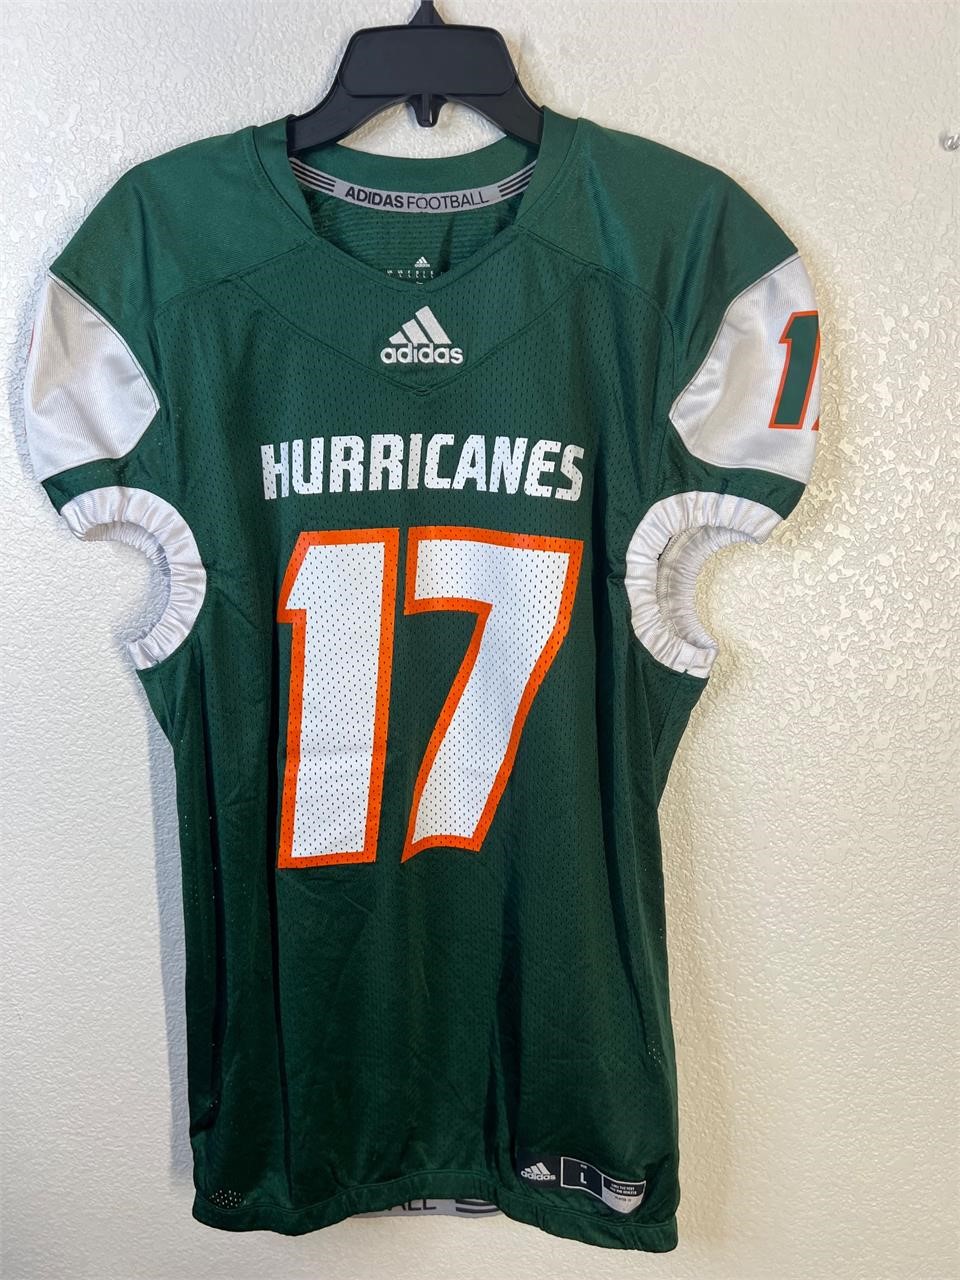 University Miami Hurricanes Adidas Jersey Sample